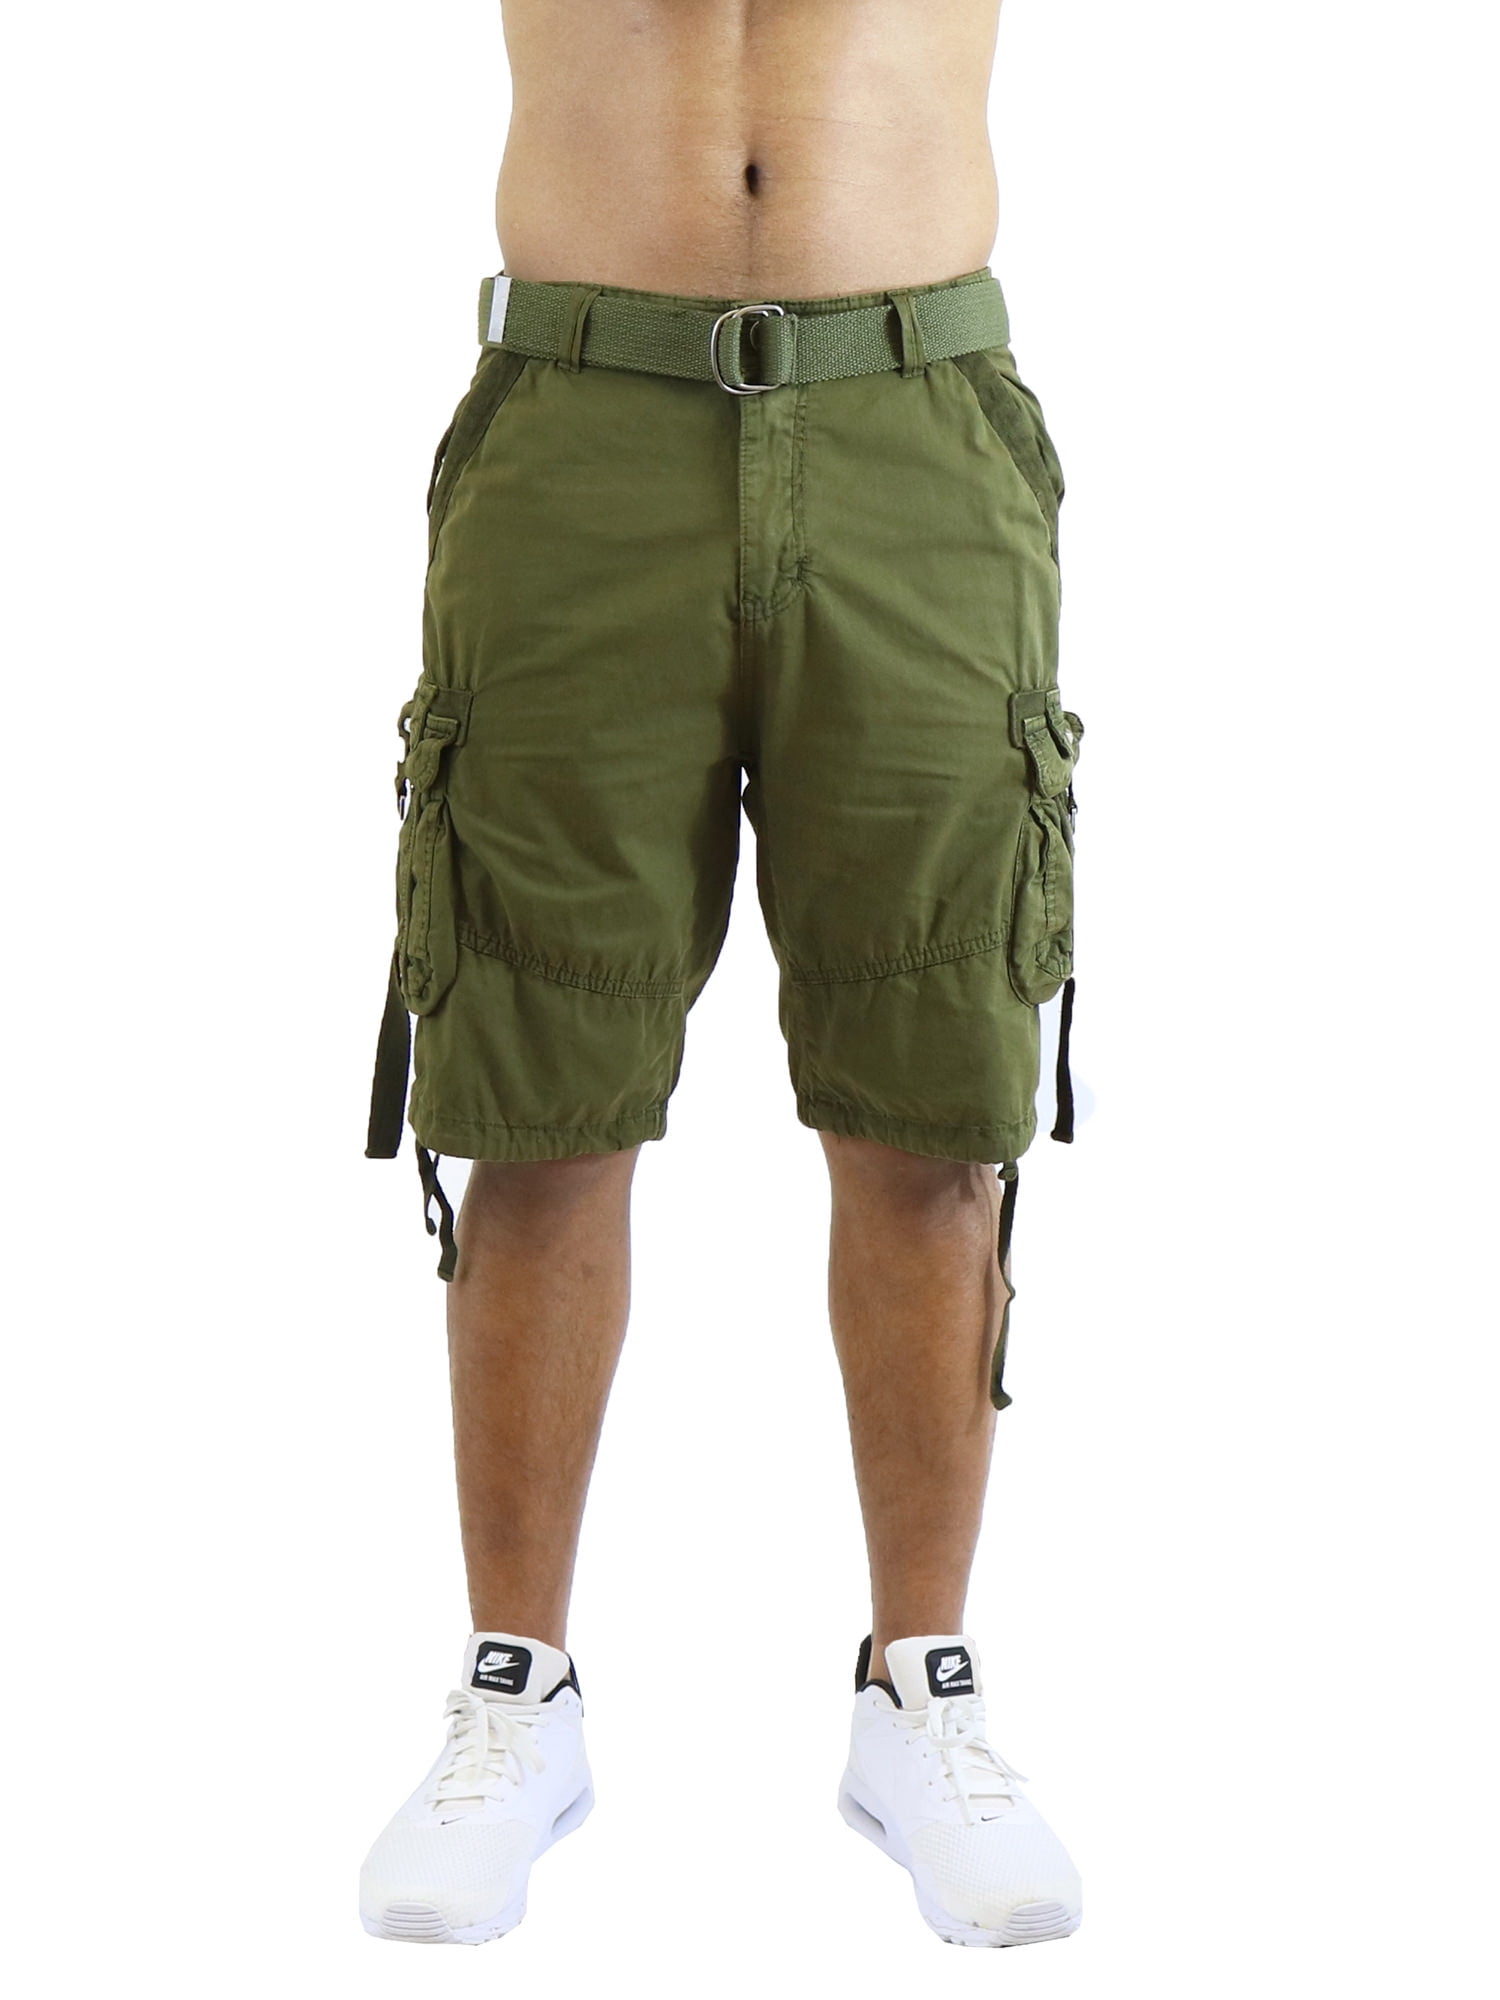 Dimensione:5XL Lavecchia Men's Bermuda Shorts Turquoise-Black Big Sizes 